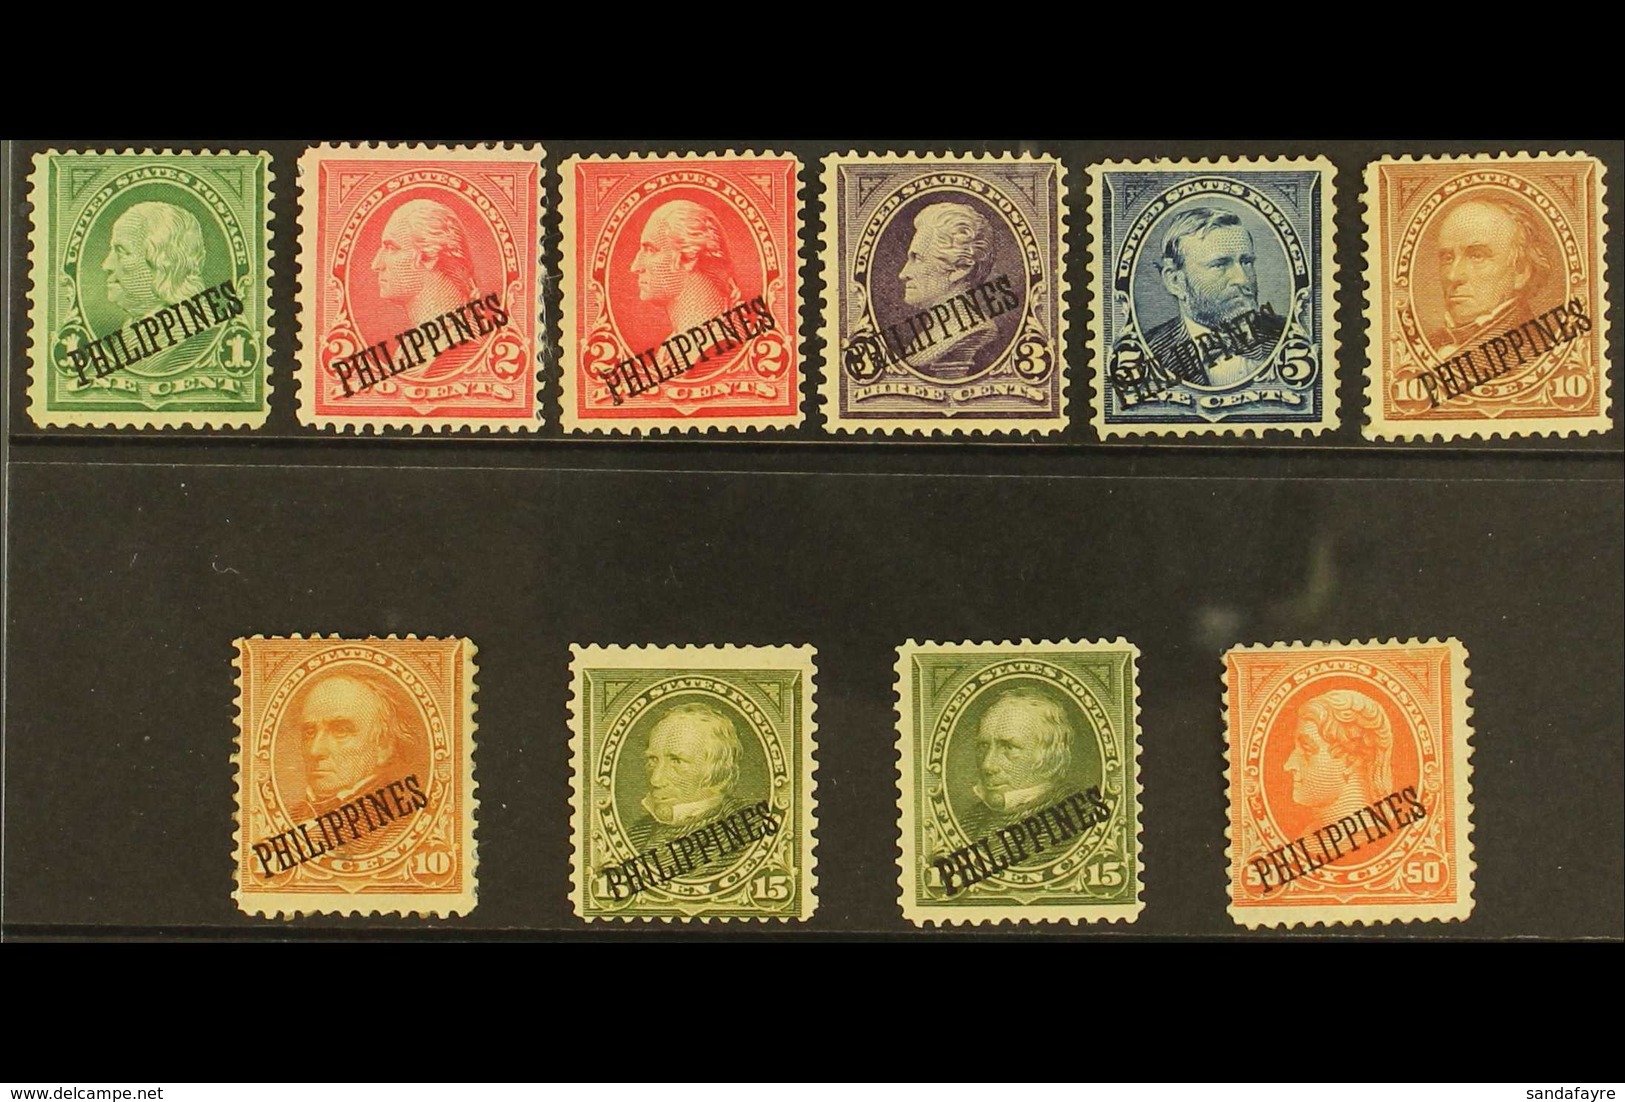 1899 Mint/unused Value To 50c Orange Ovptd Philippines Incl 2c Shades, 10c Both Types, 15c Both Shades, Between Sc 213/2 - Philippines